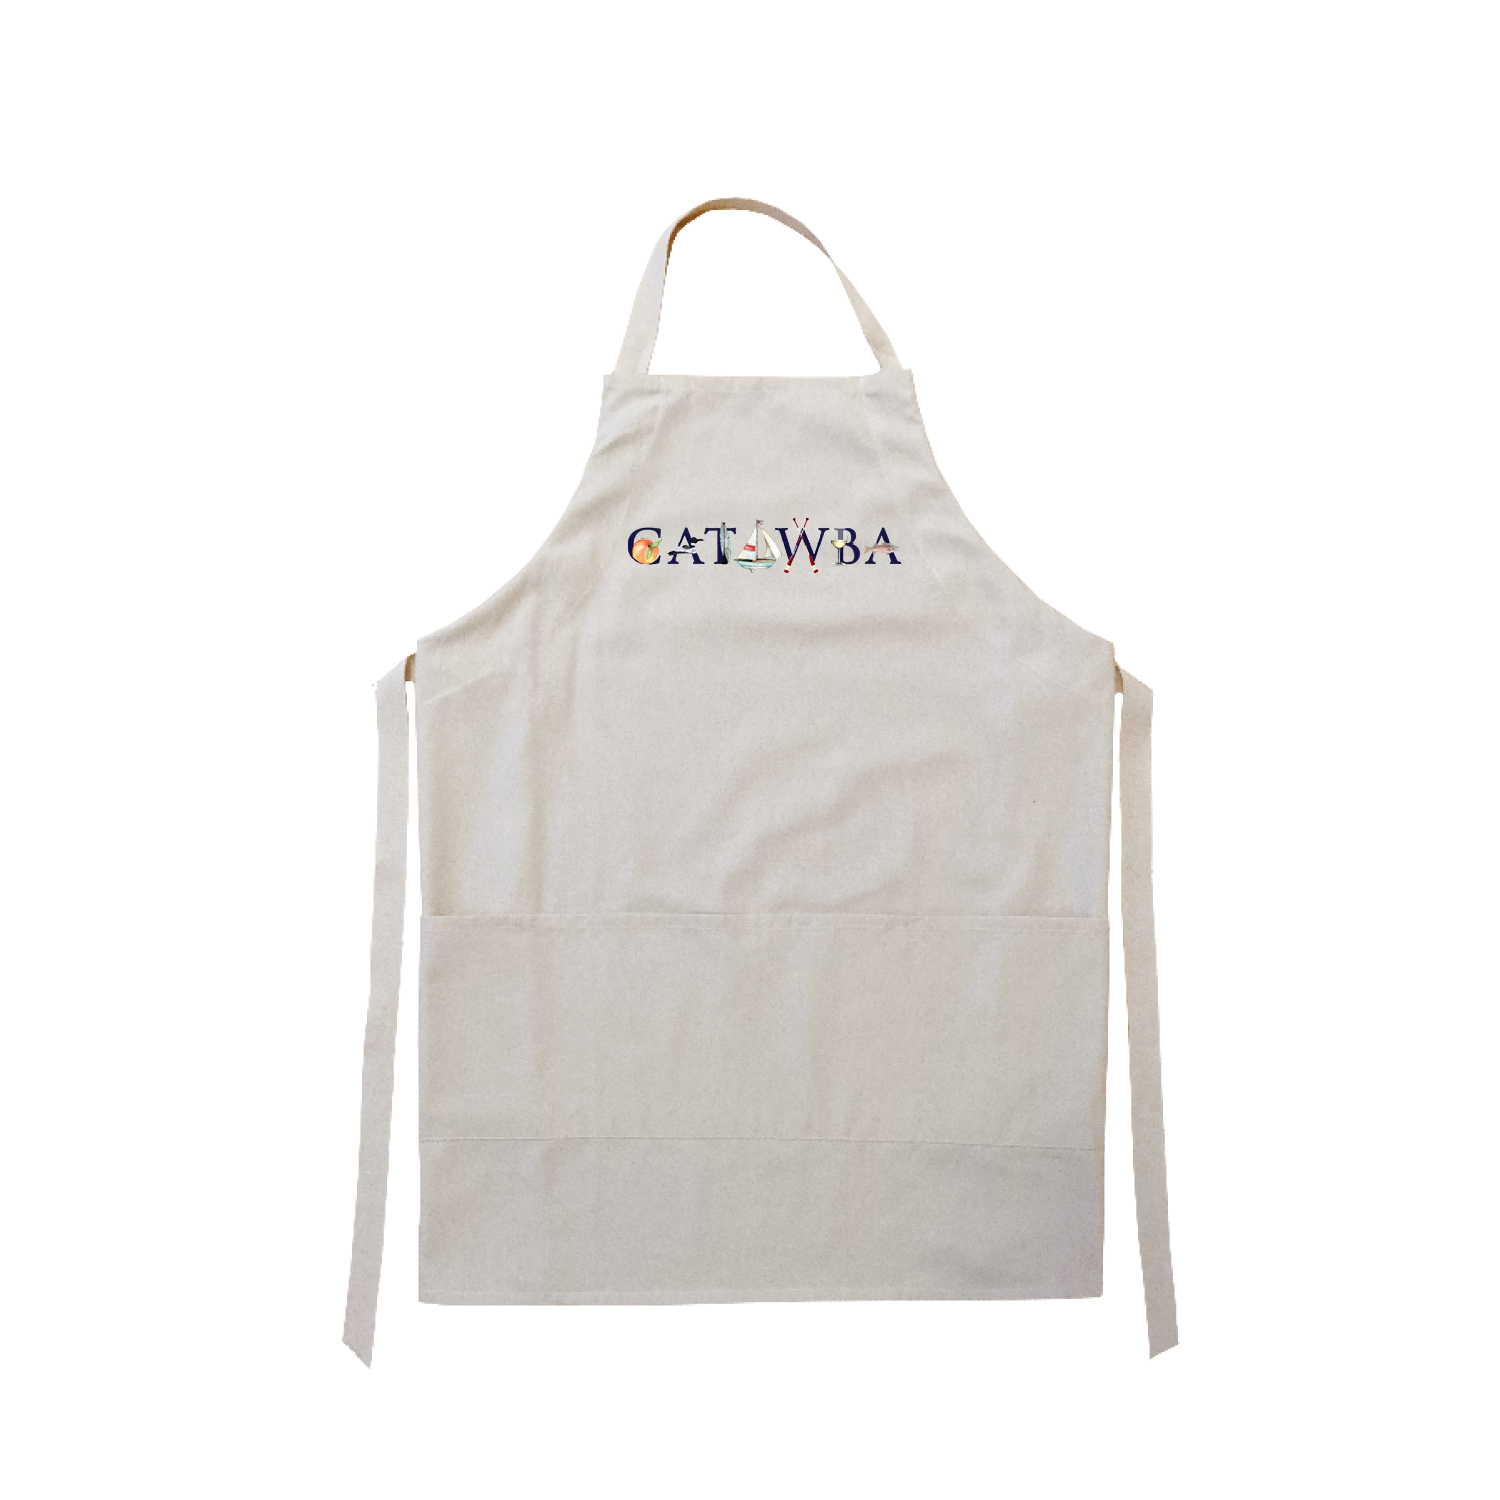 catawba apron